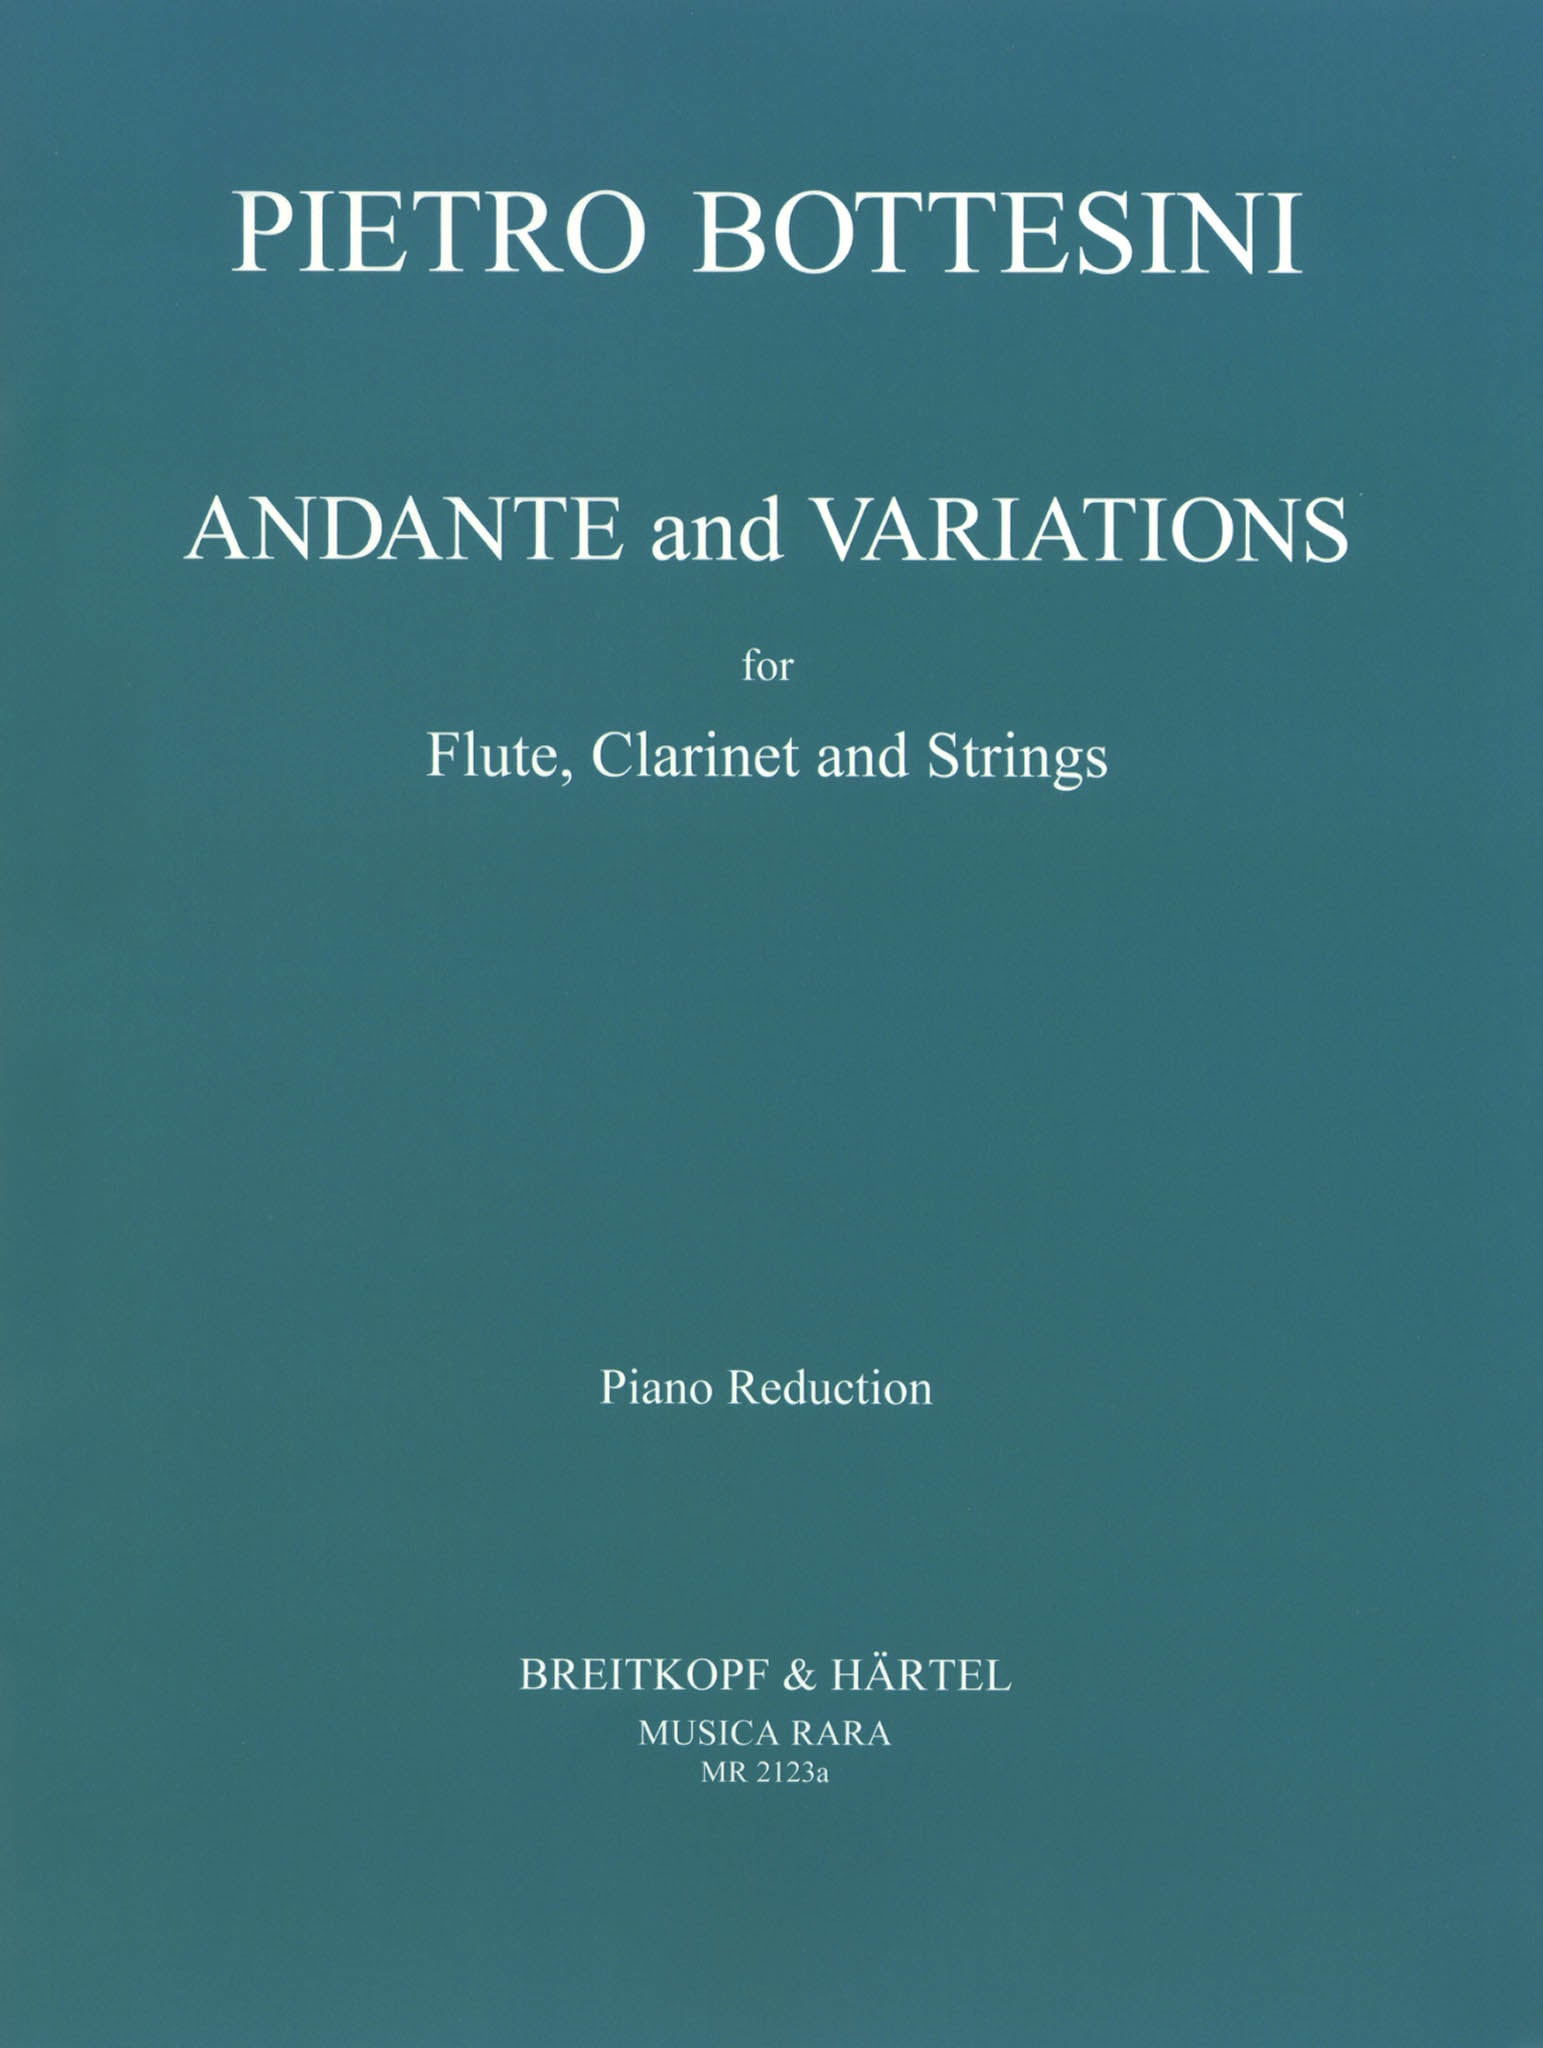 Pietro Bottesini Andante Variations flute clarinet strings piano reduction Cover